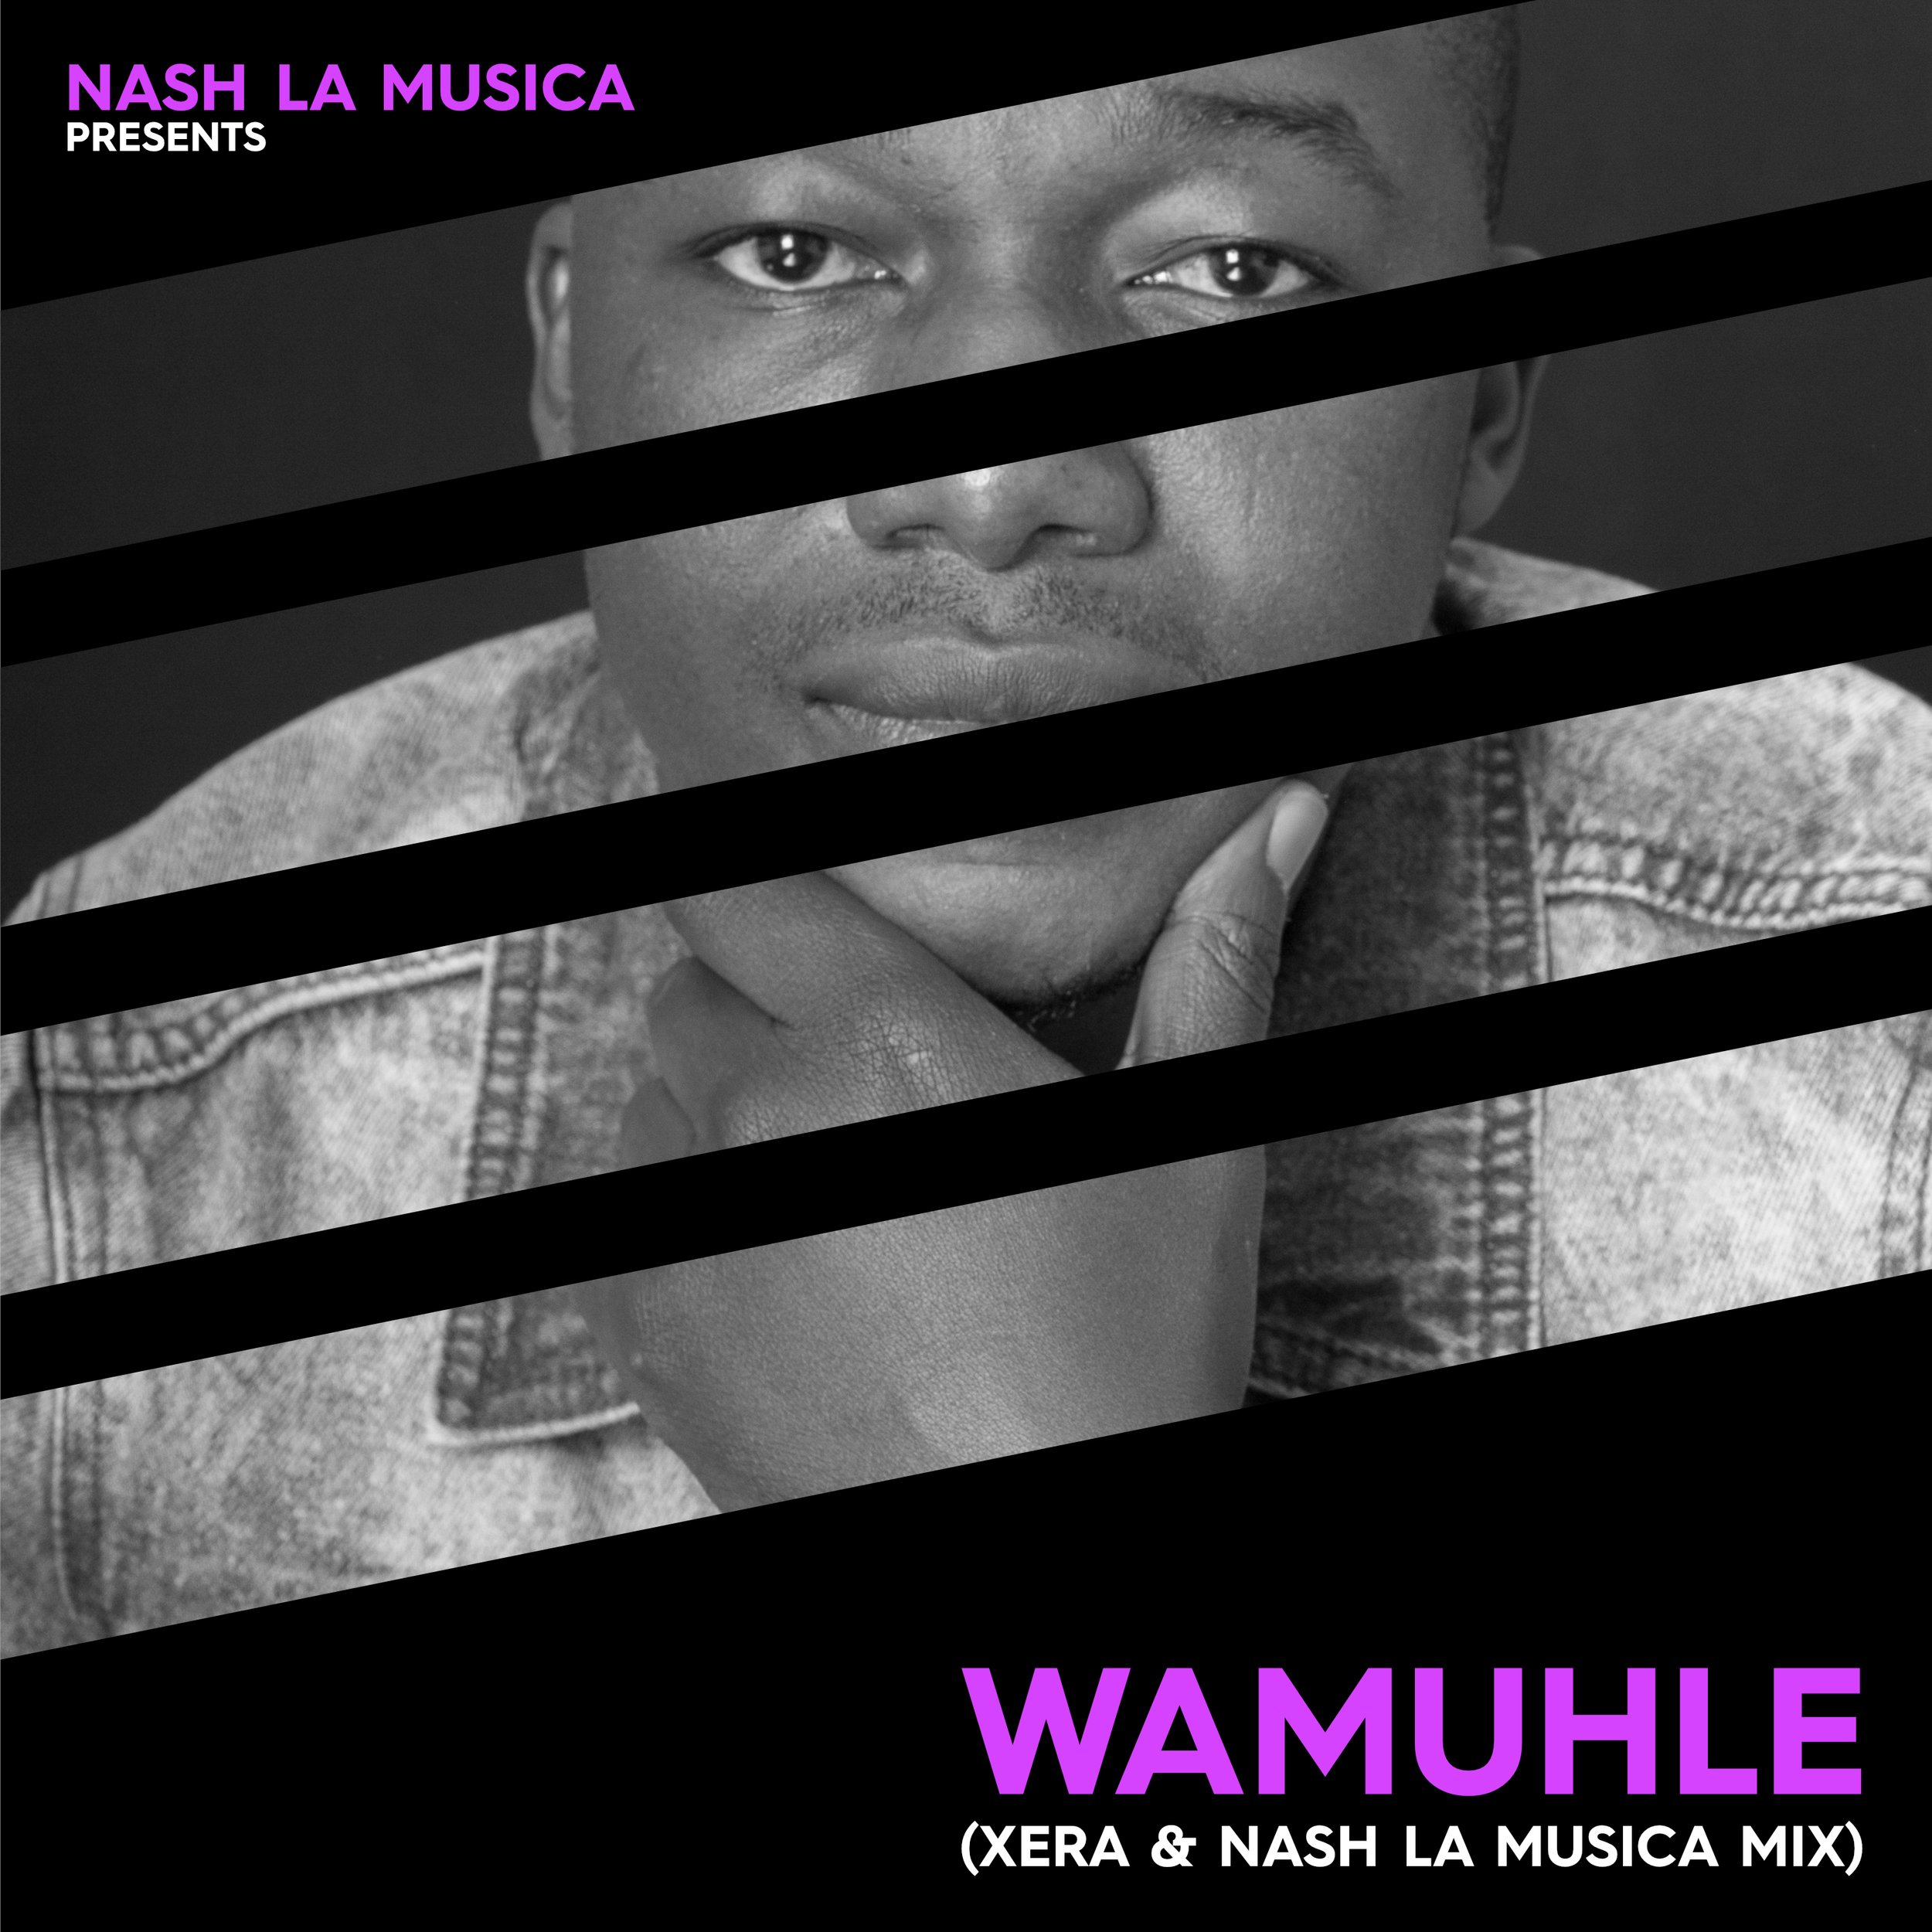 Nash La Musica Presents Wamuhle - Artwork (1).jpg